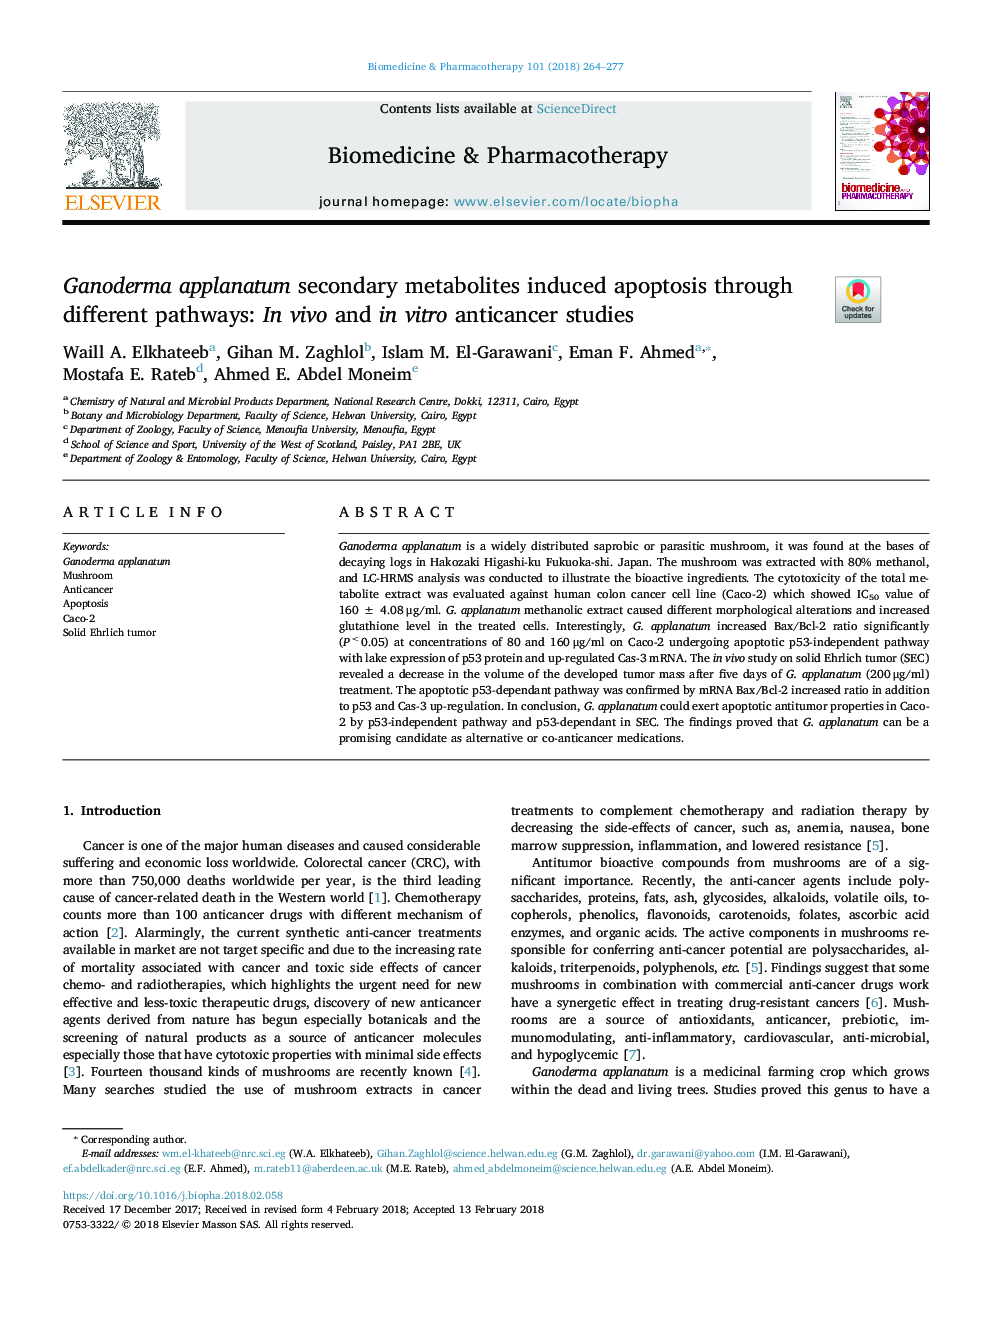 Ganoderma applanatum secondary metabolites induced apoptosis through different pathways: In vivo and in vitro anticancer studies